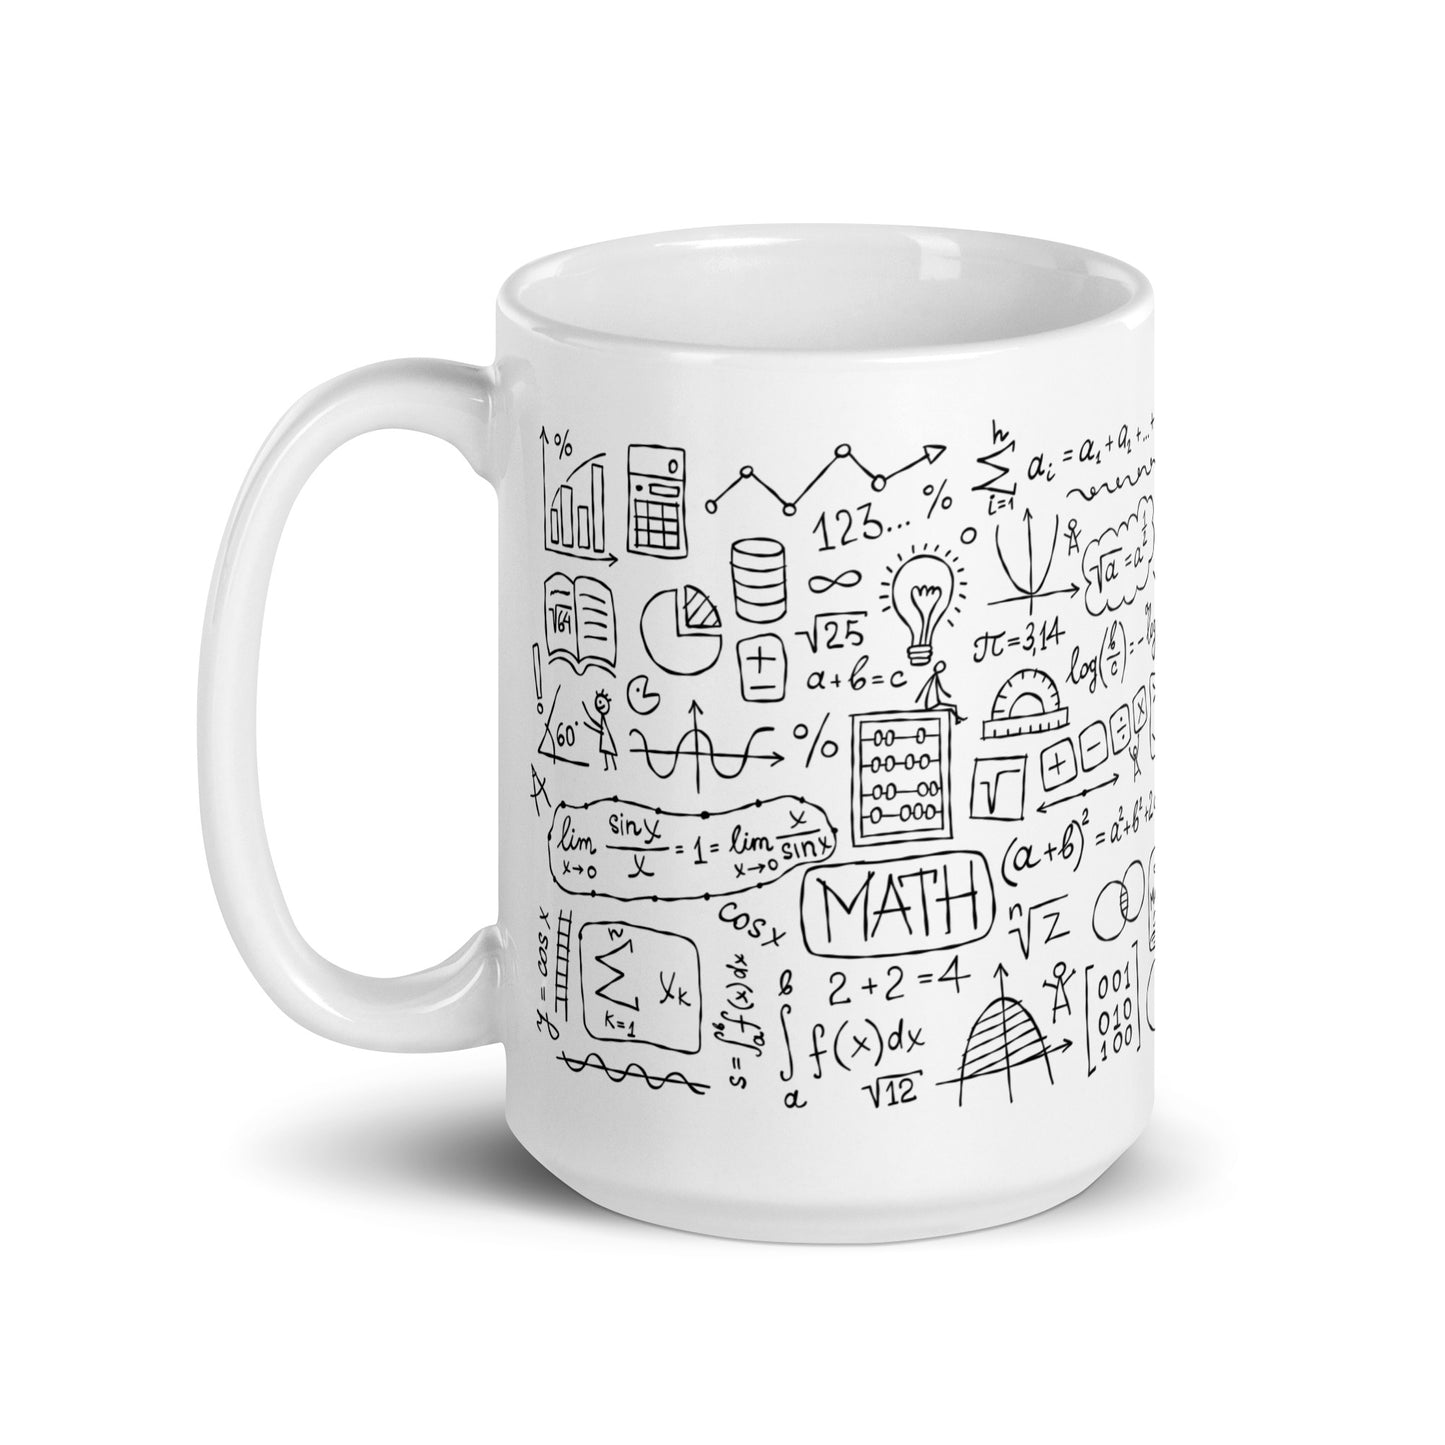 Mathematical Formulas and Symbols Gift Mug for Teachers, Students, and STEM Enthusiasts kudrylab